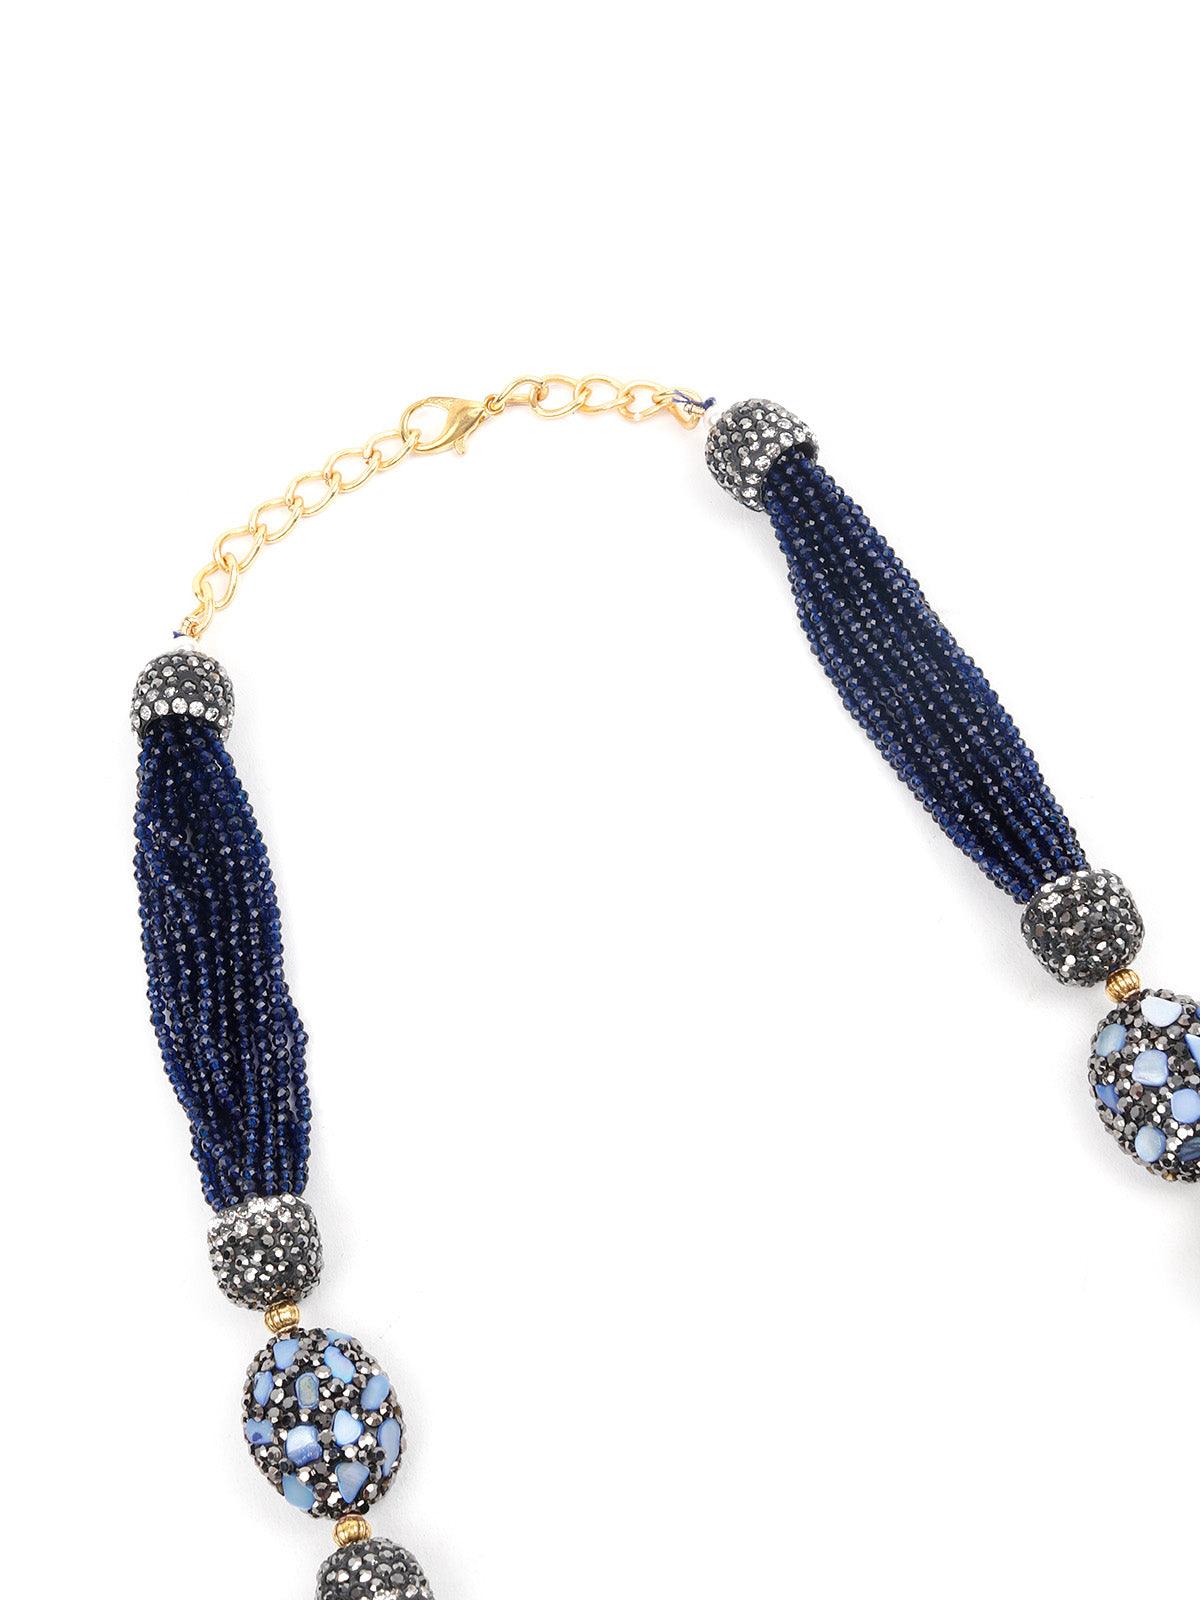 Silk Sari Bead Necklace - 5 string – JCatma